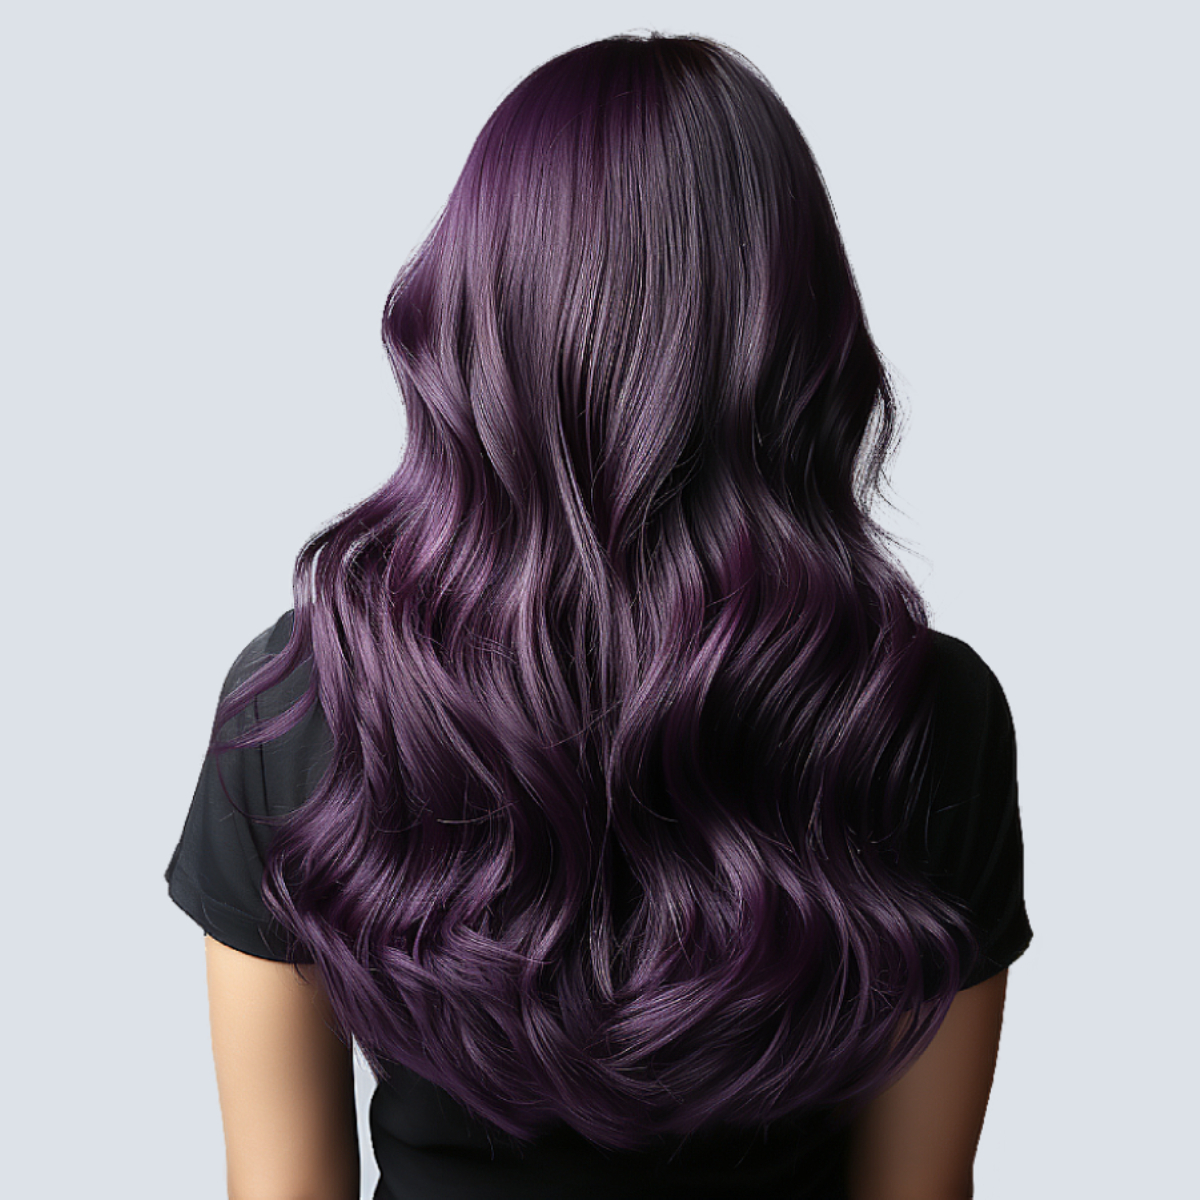 Long dark purple hair